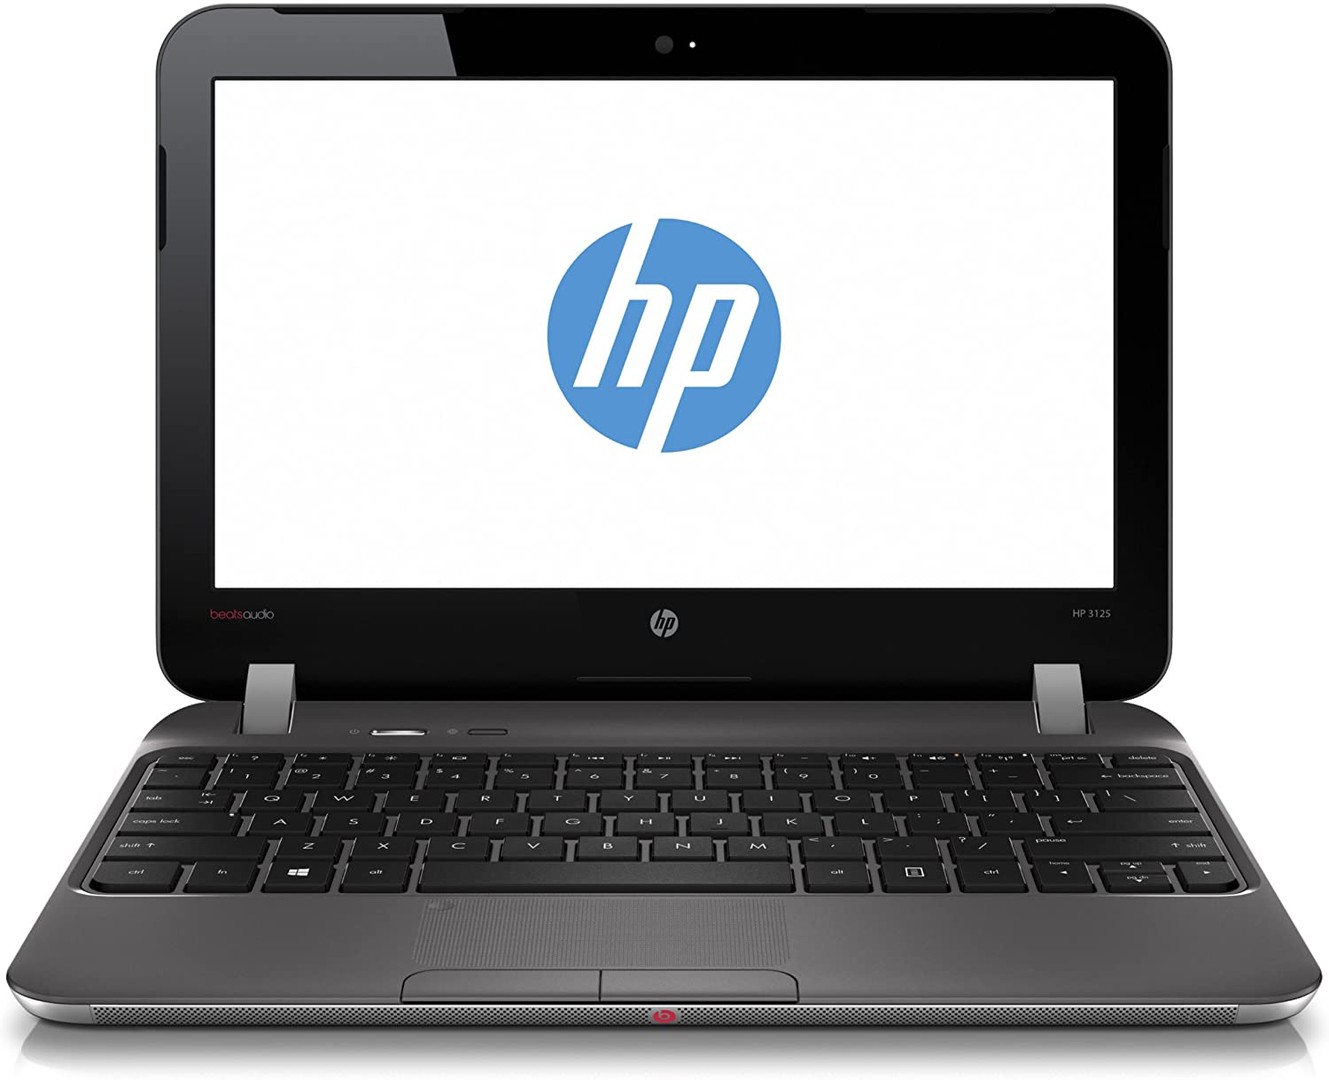 computadoras y laptops - LAPTOP HP 3125 MINI /CPU AMD A2 /11.6' /4GB RAM /320GB HDD 